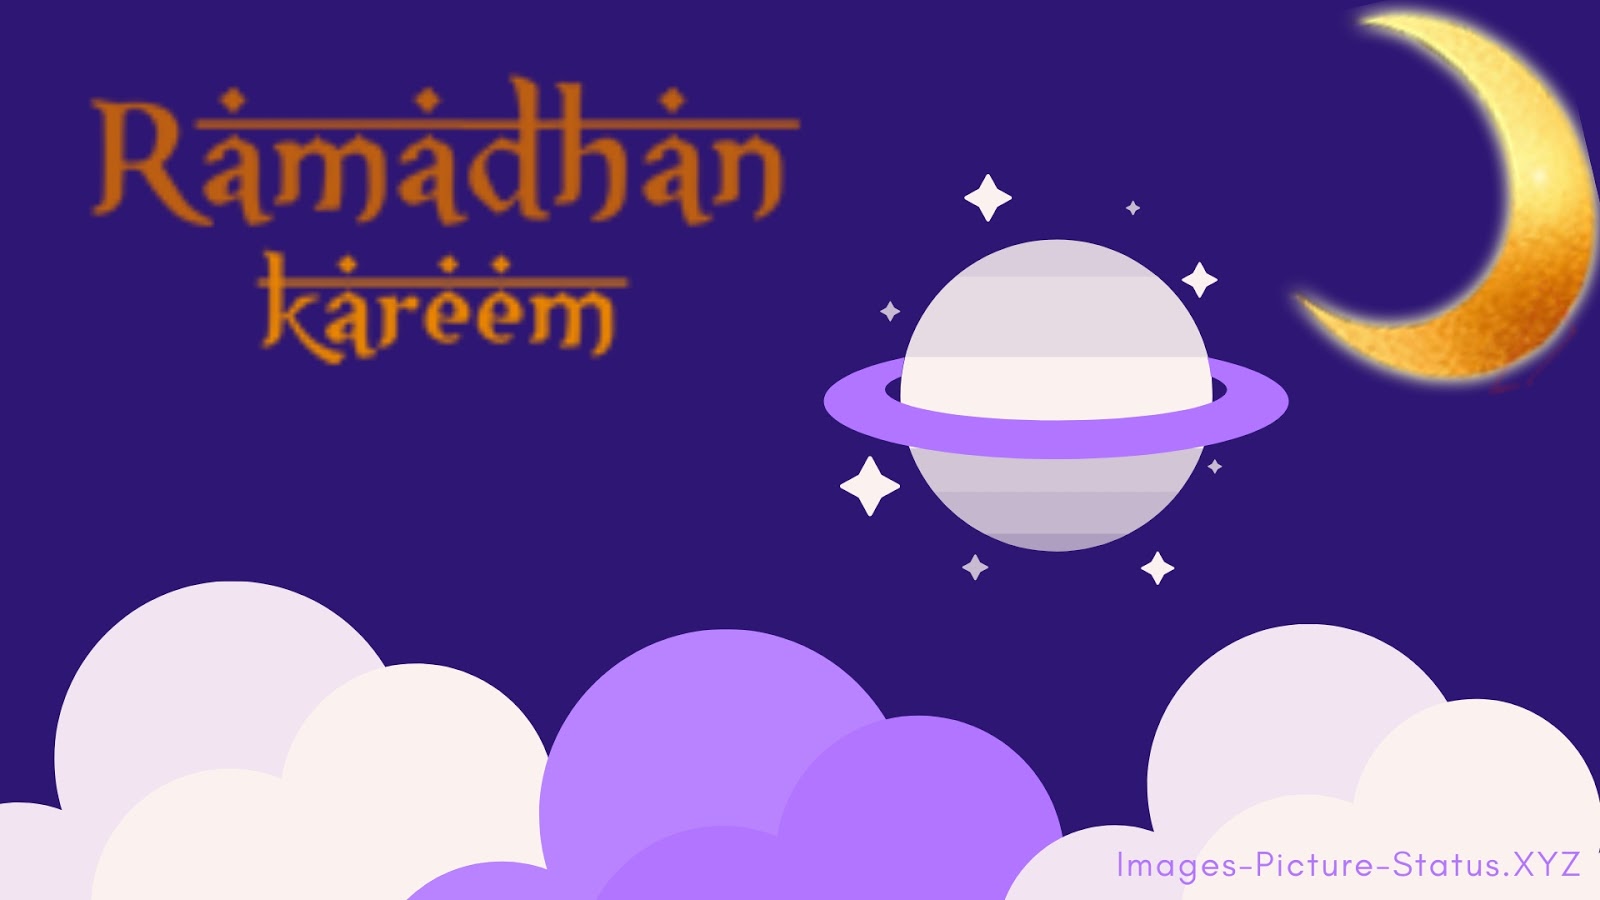 Happy Ramadhan Kareem Greetings Image Picture For